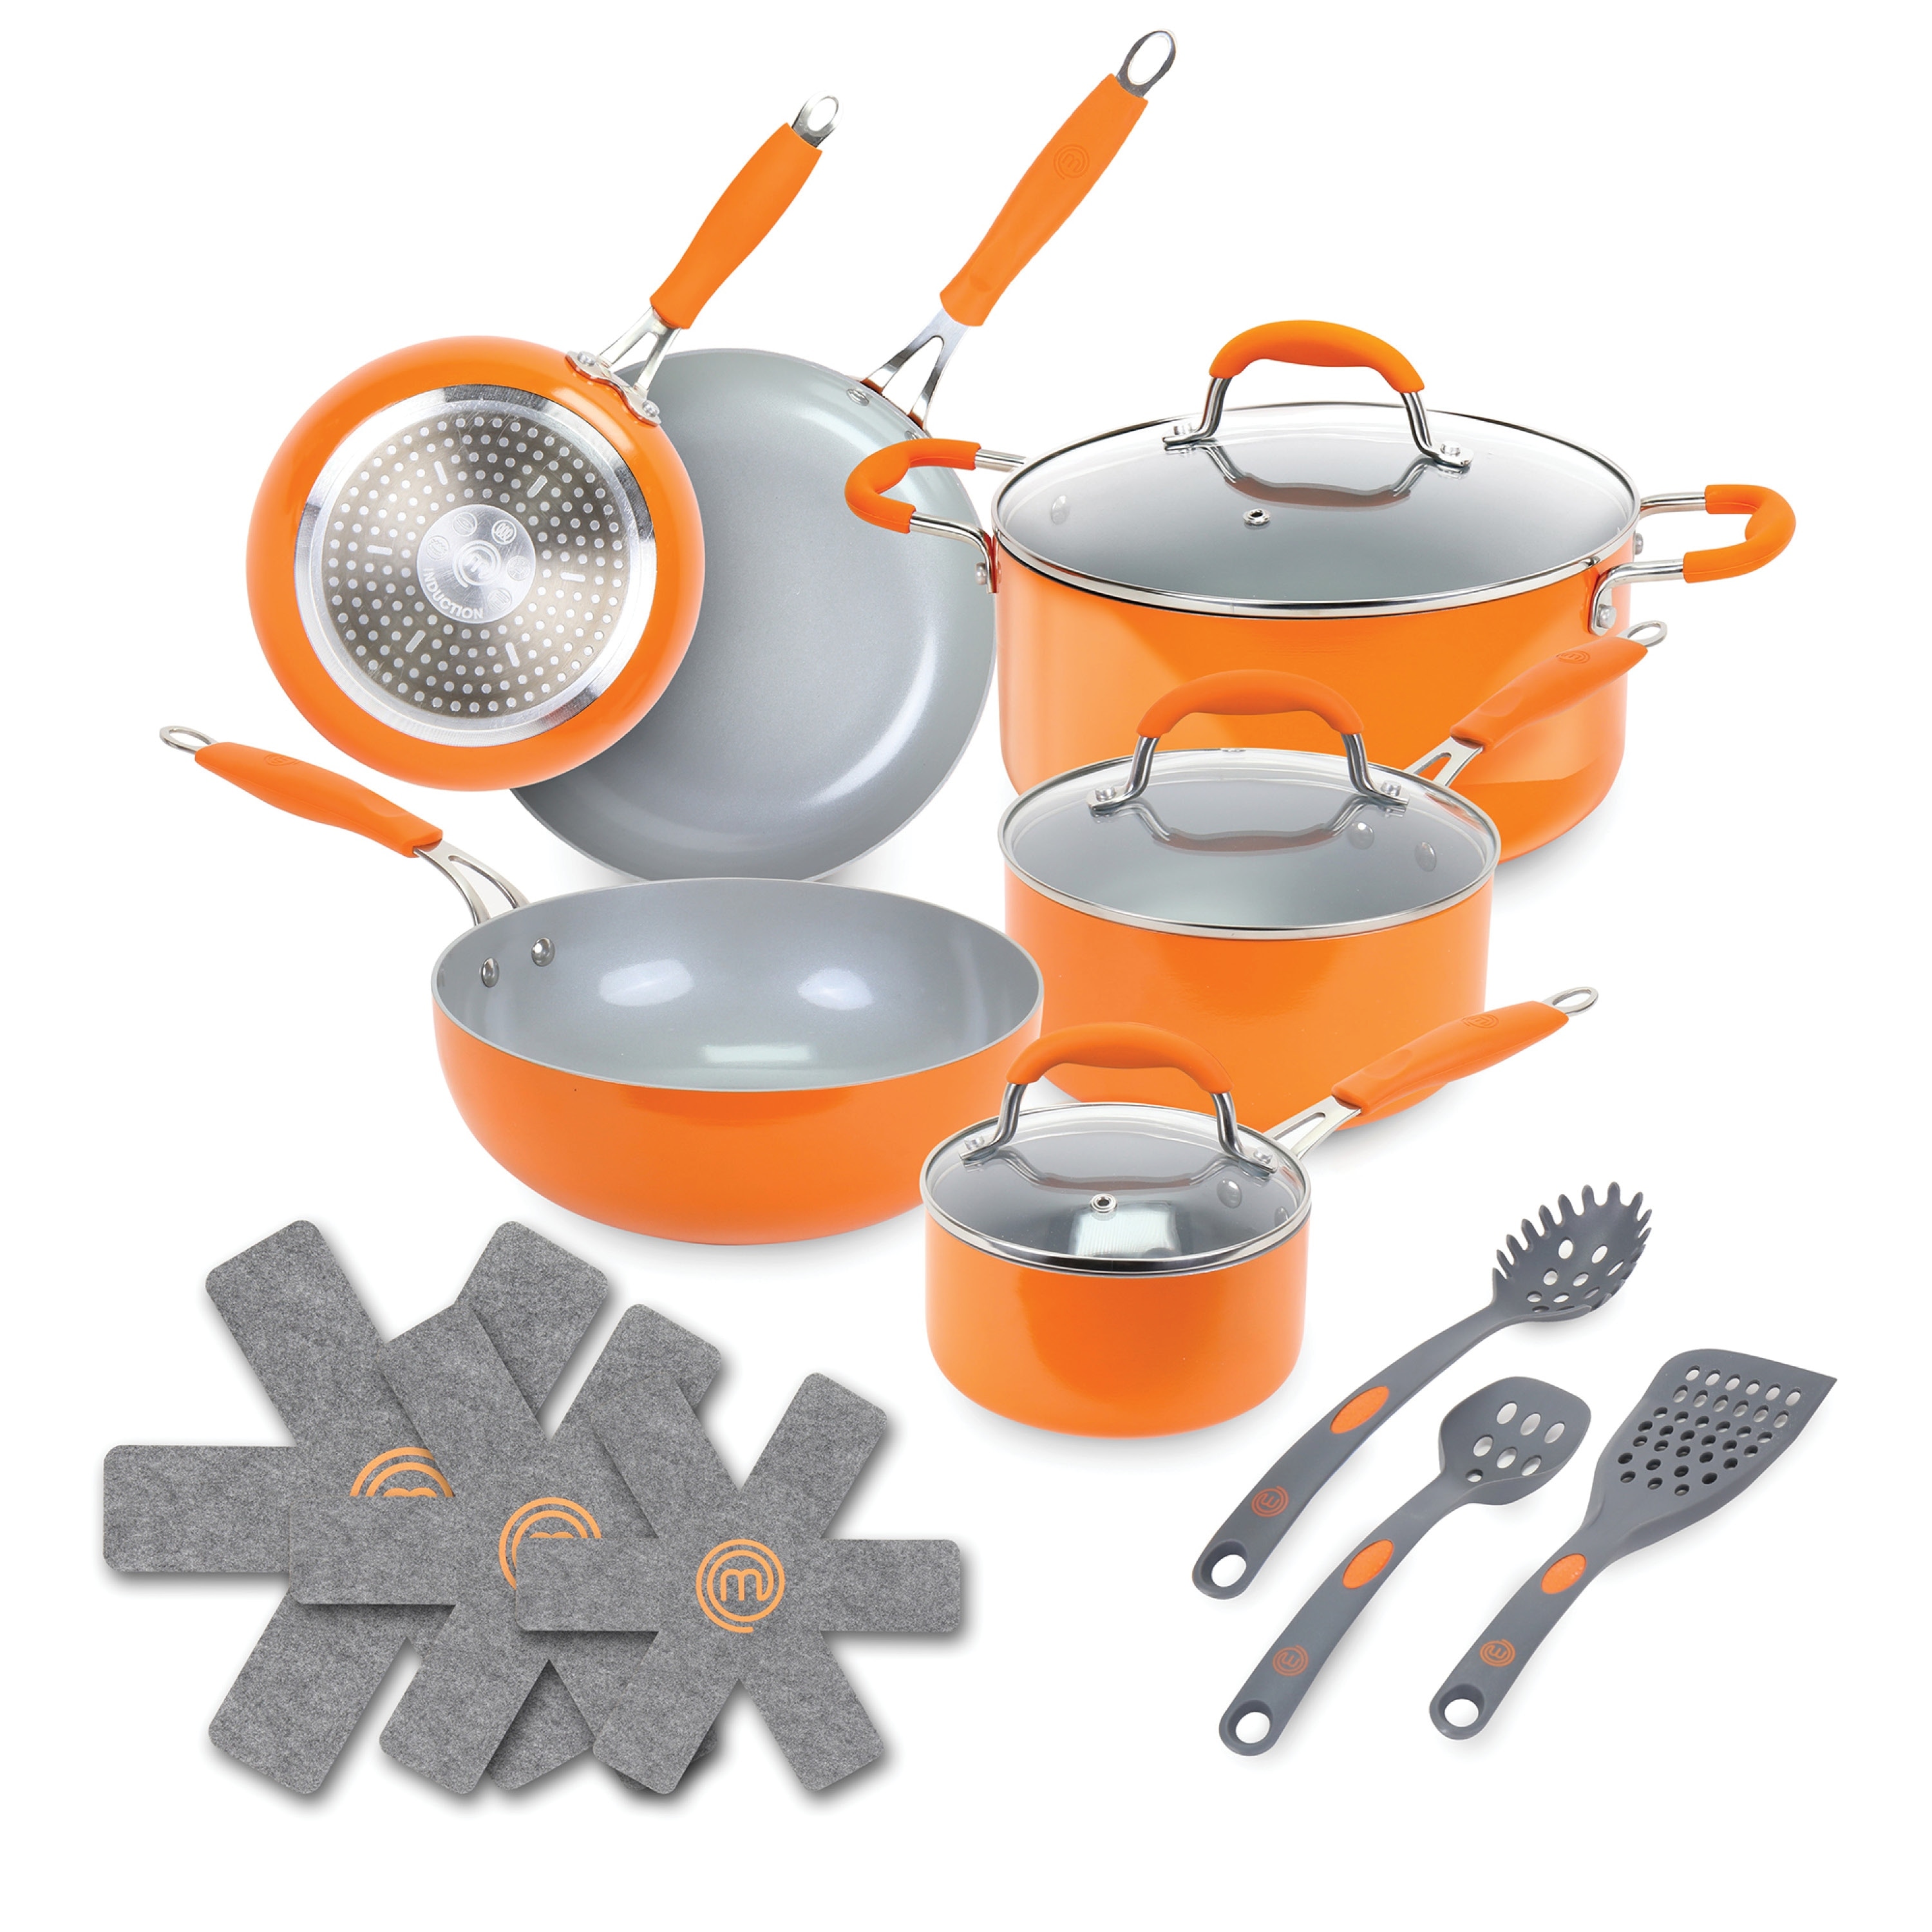 https://ak1.ostkcdn.com/images/products/is/images/direct/bd4312611366c2bd8657261dbffdafe8d3b8f08f/MasterChef-MC3000-15-Pieces-Champions-Cookware-Set-Orange.jpg